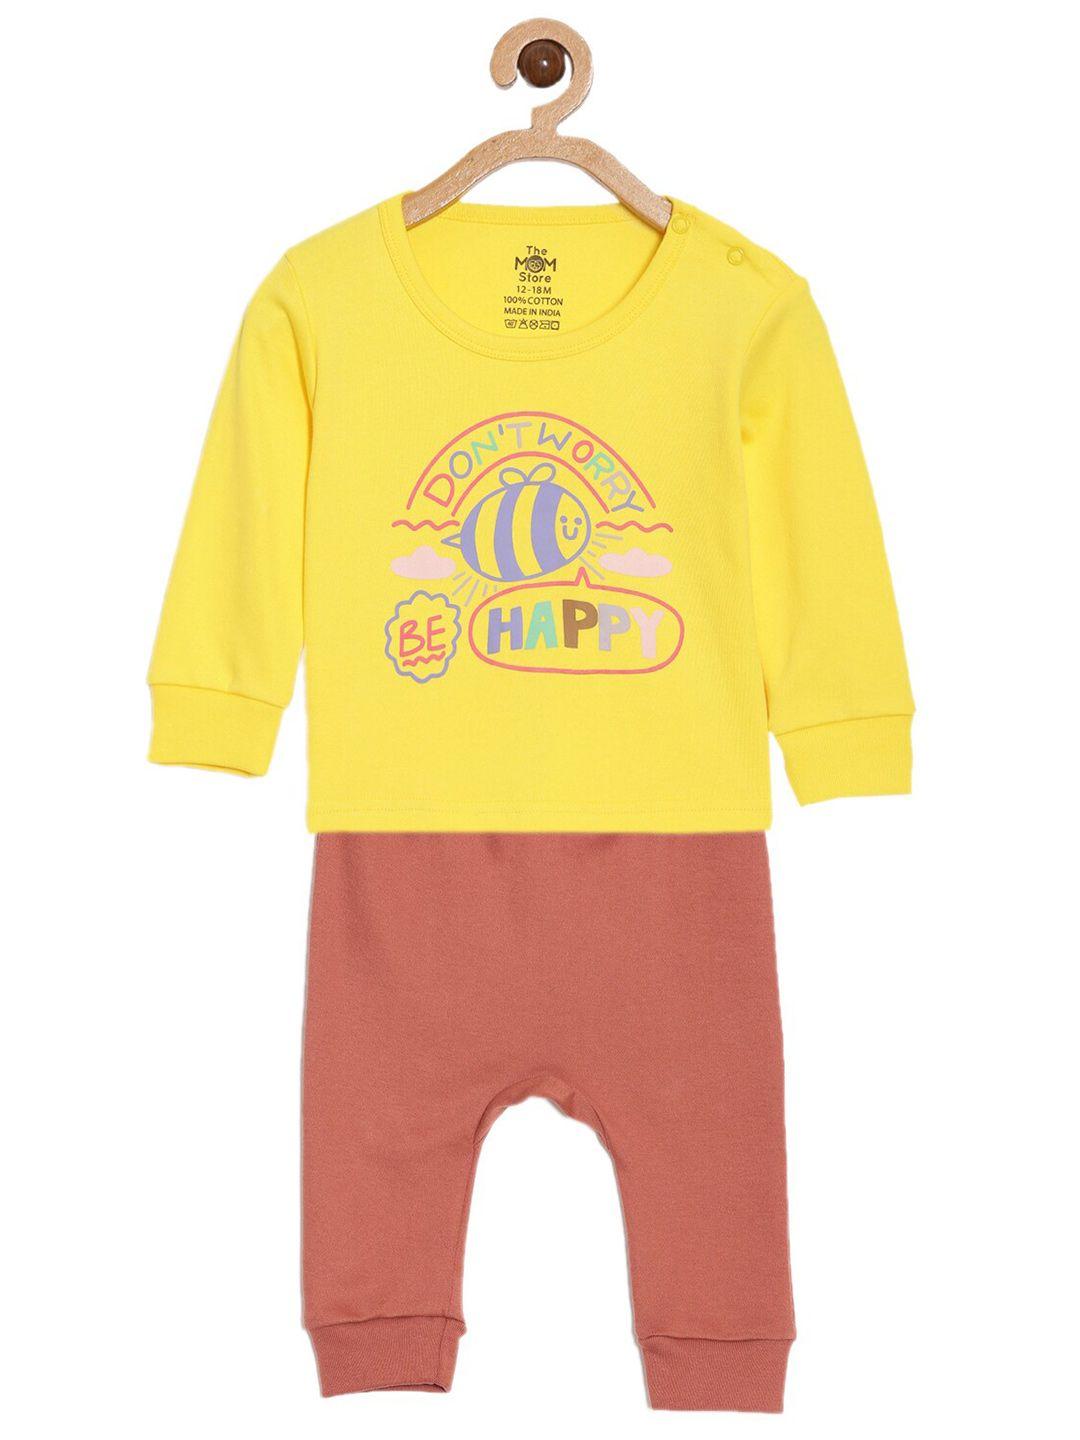 the-mom-store-unisex-kids-yellow-&-brown-printed-t-shirt-with-pyjamas